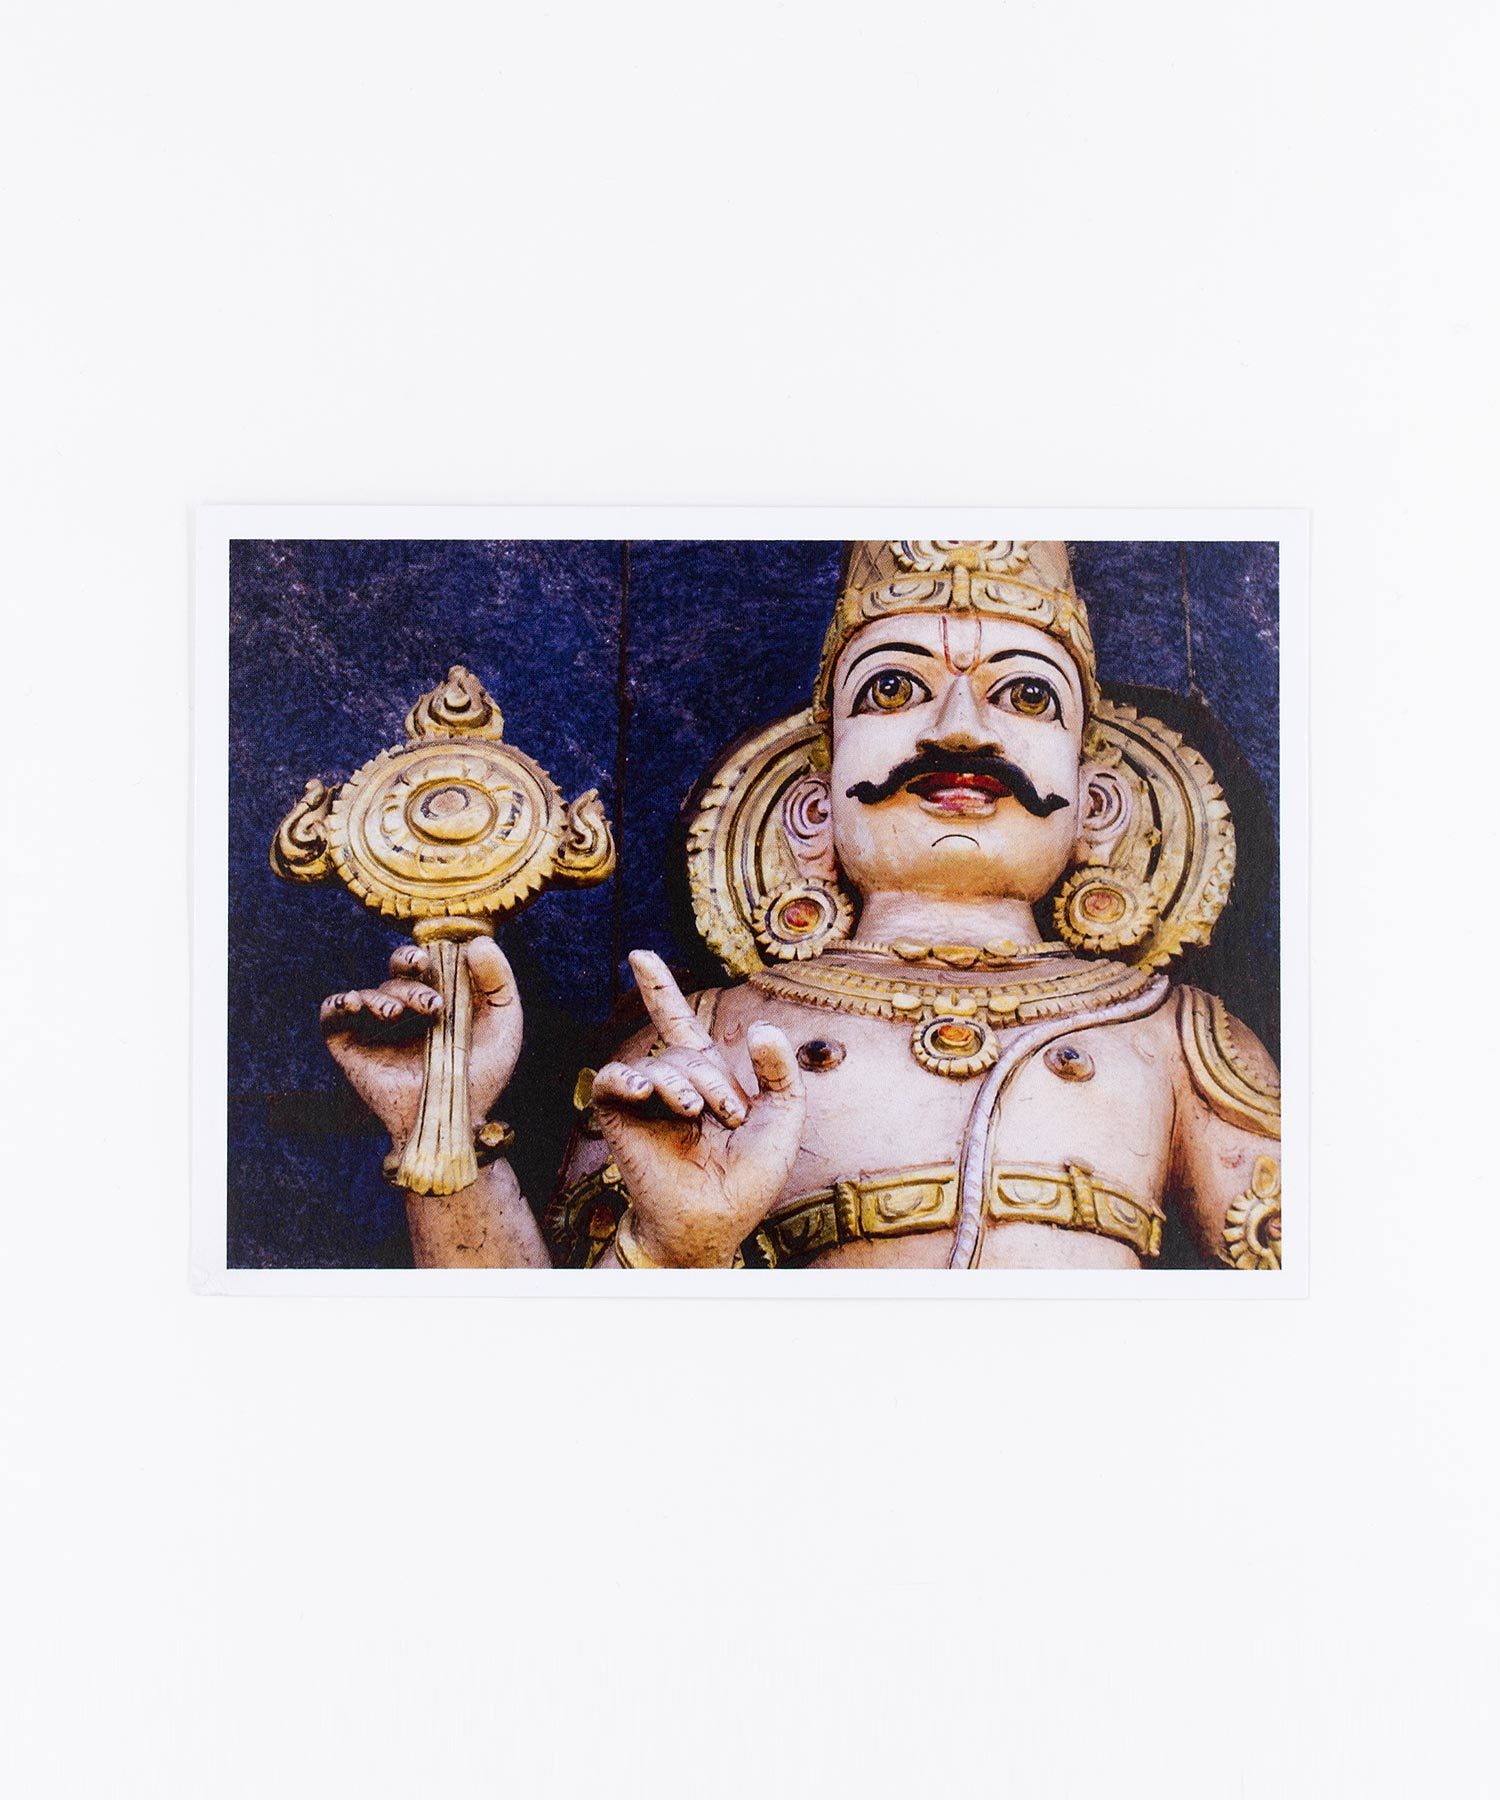 Fotopostkarte Vishnu